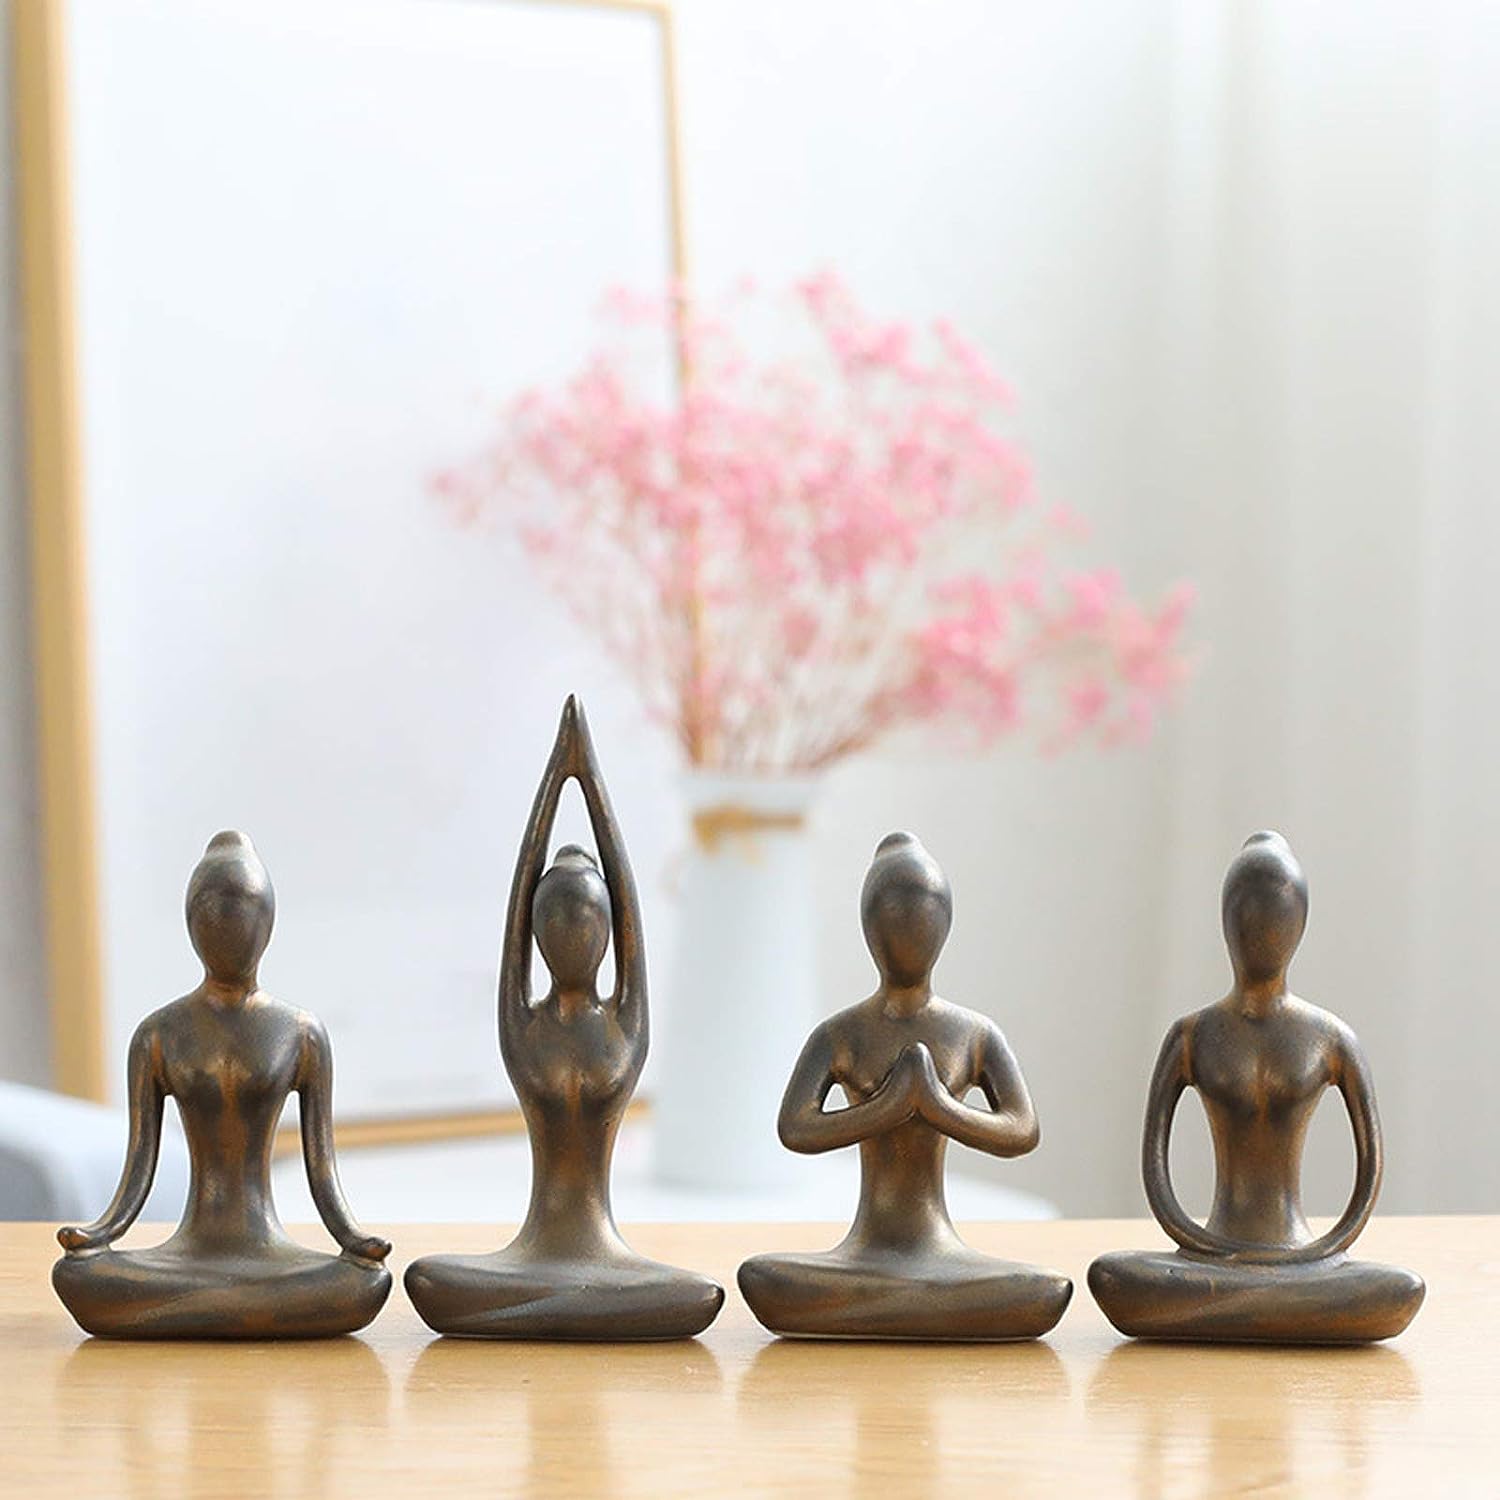 Yoga Pose Sculptures